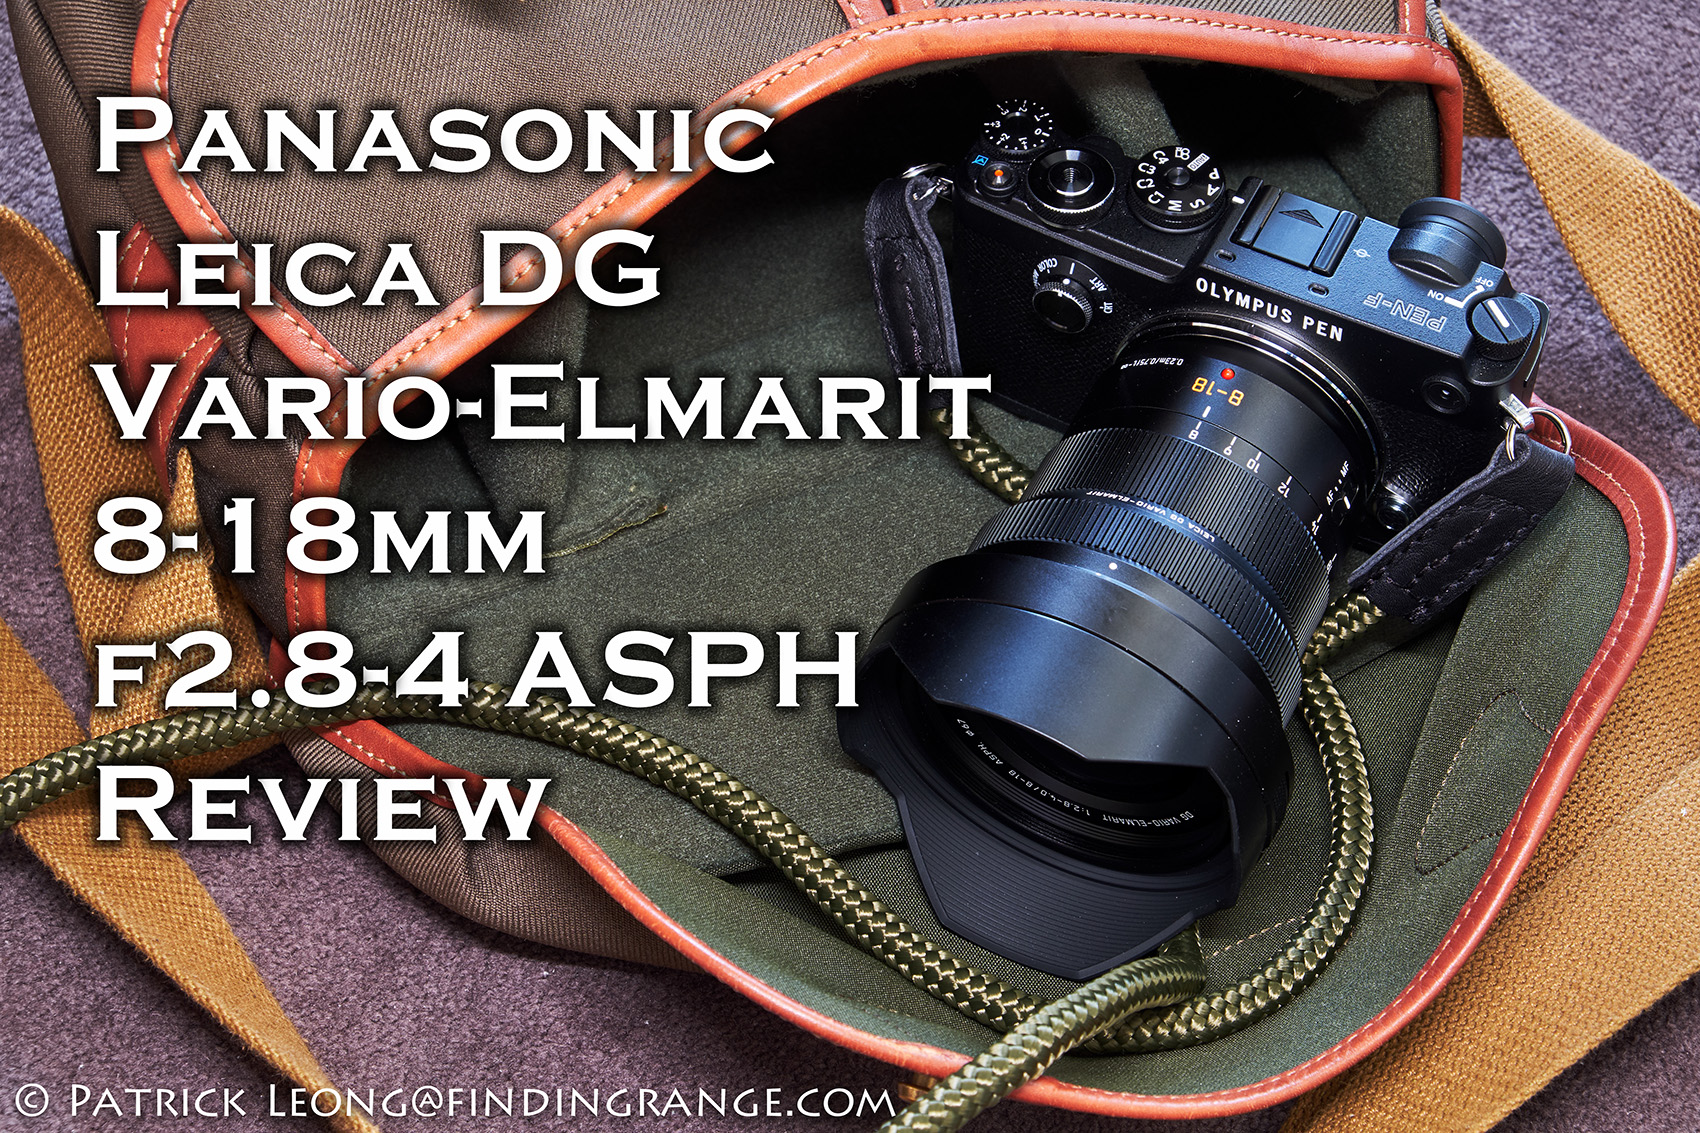 Panasonic Leica Vario-Elmarit 8-18mm f2.8-4 ASPH Review